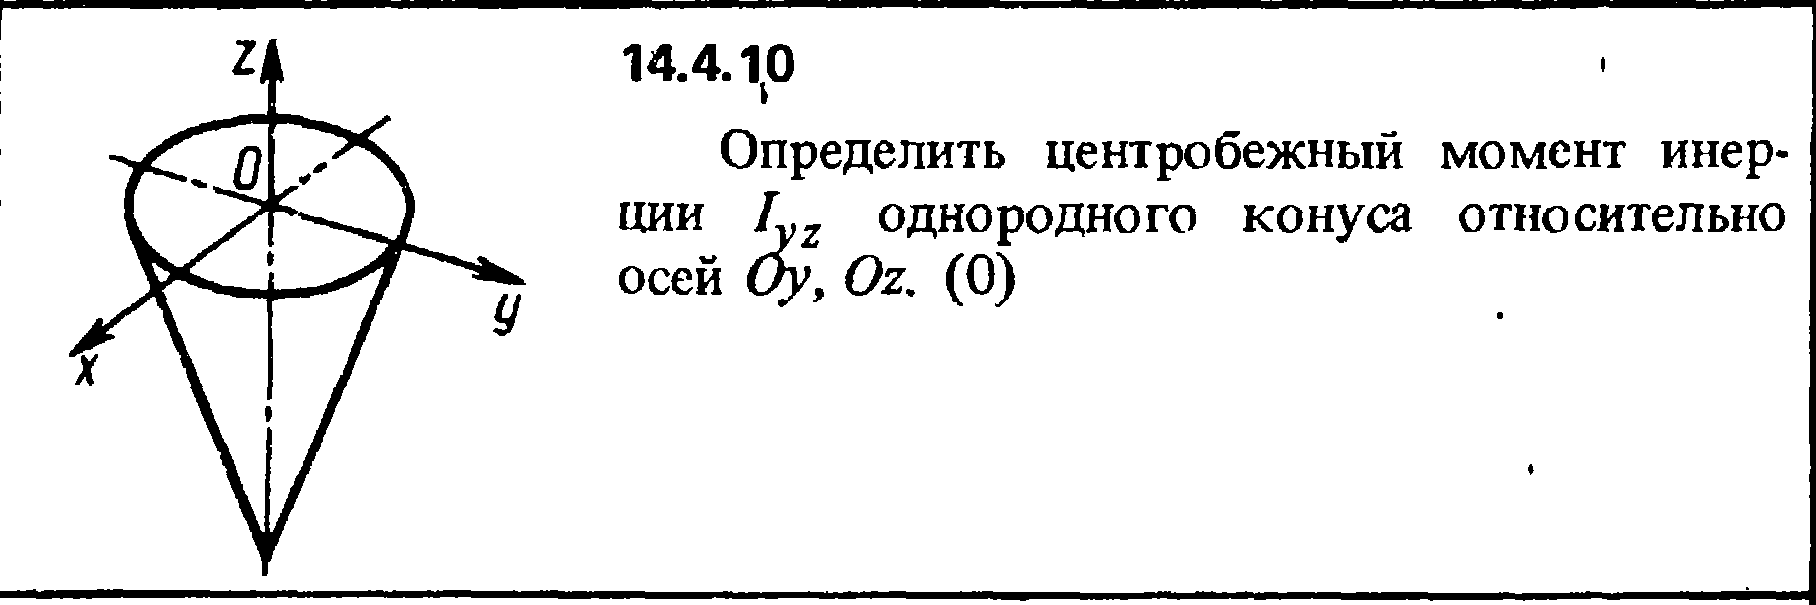 Решение задачи 14.4.10 из сборника Кепе О.Е. 1989 года